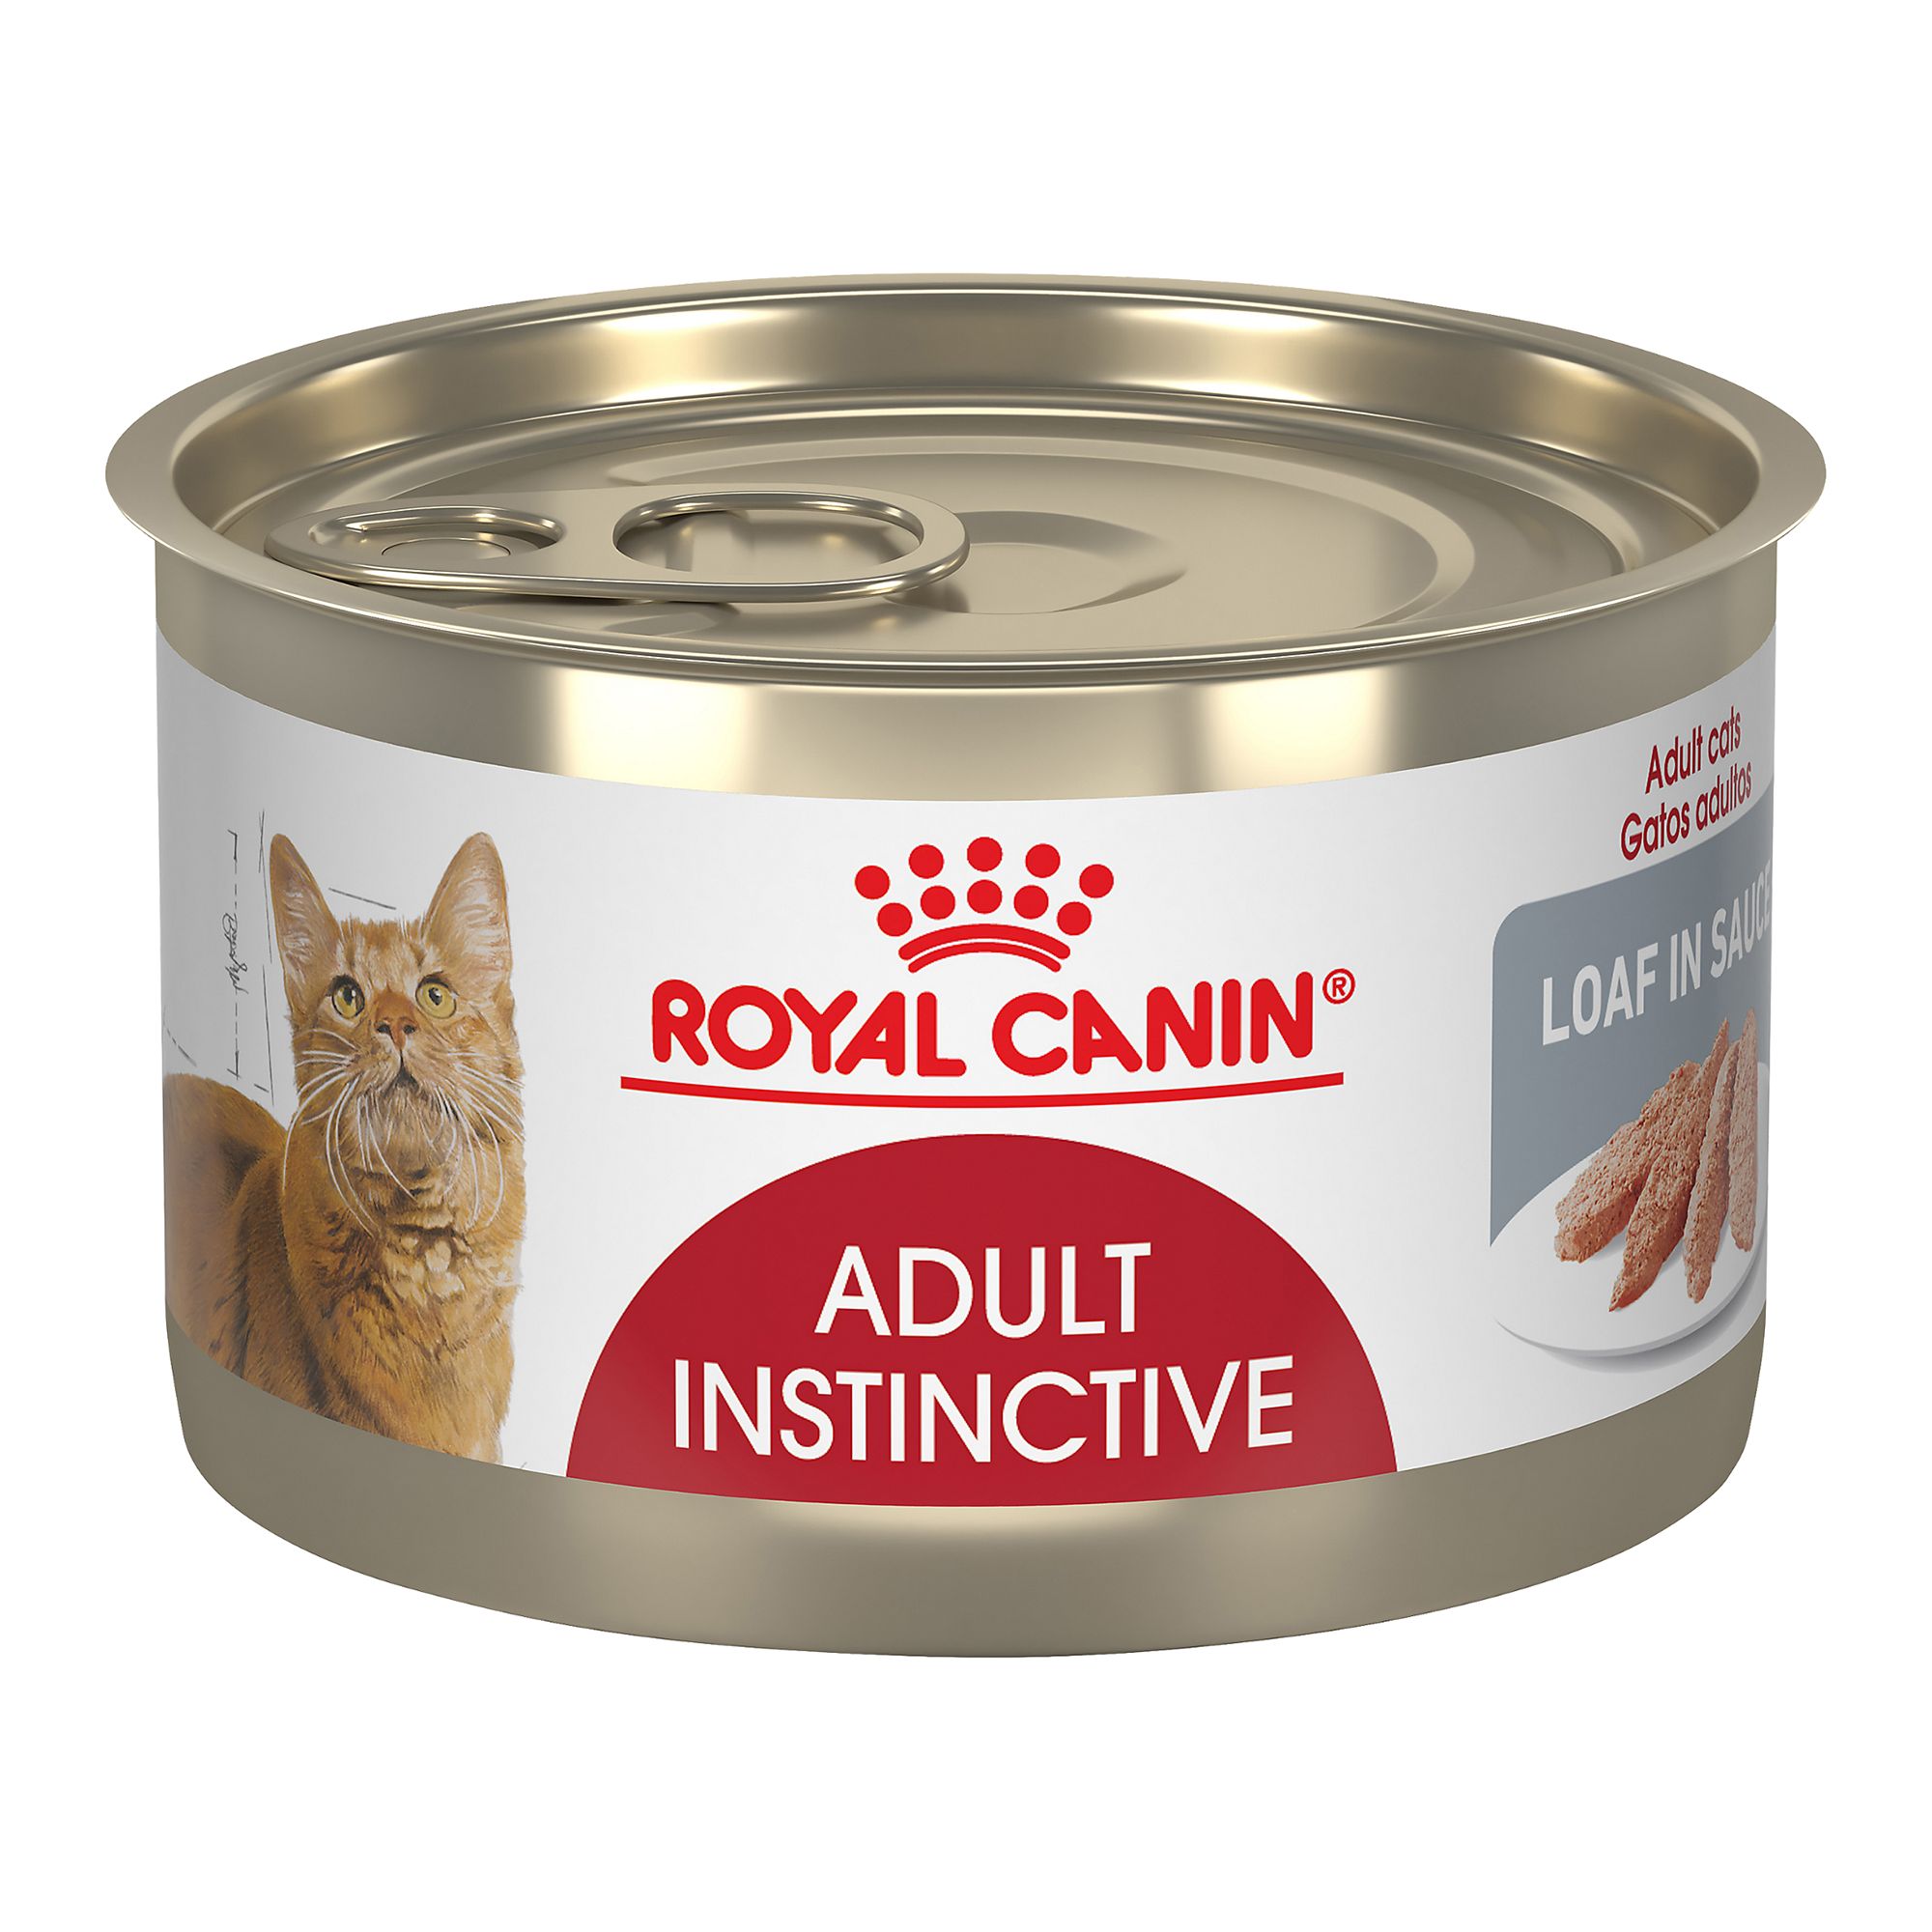 Royal Canin Stress Cat Food